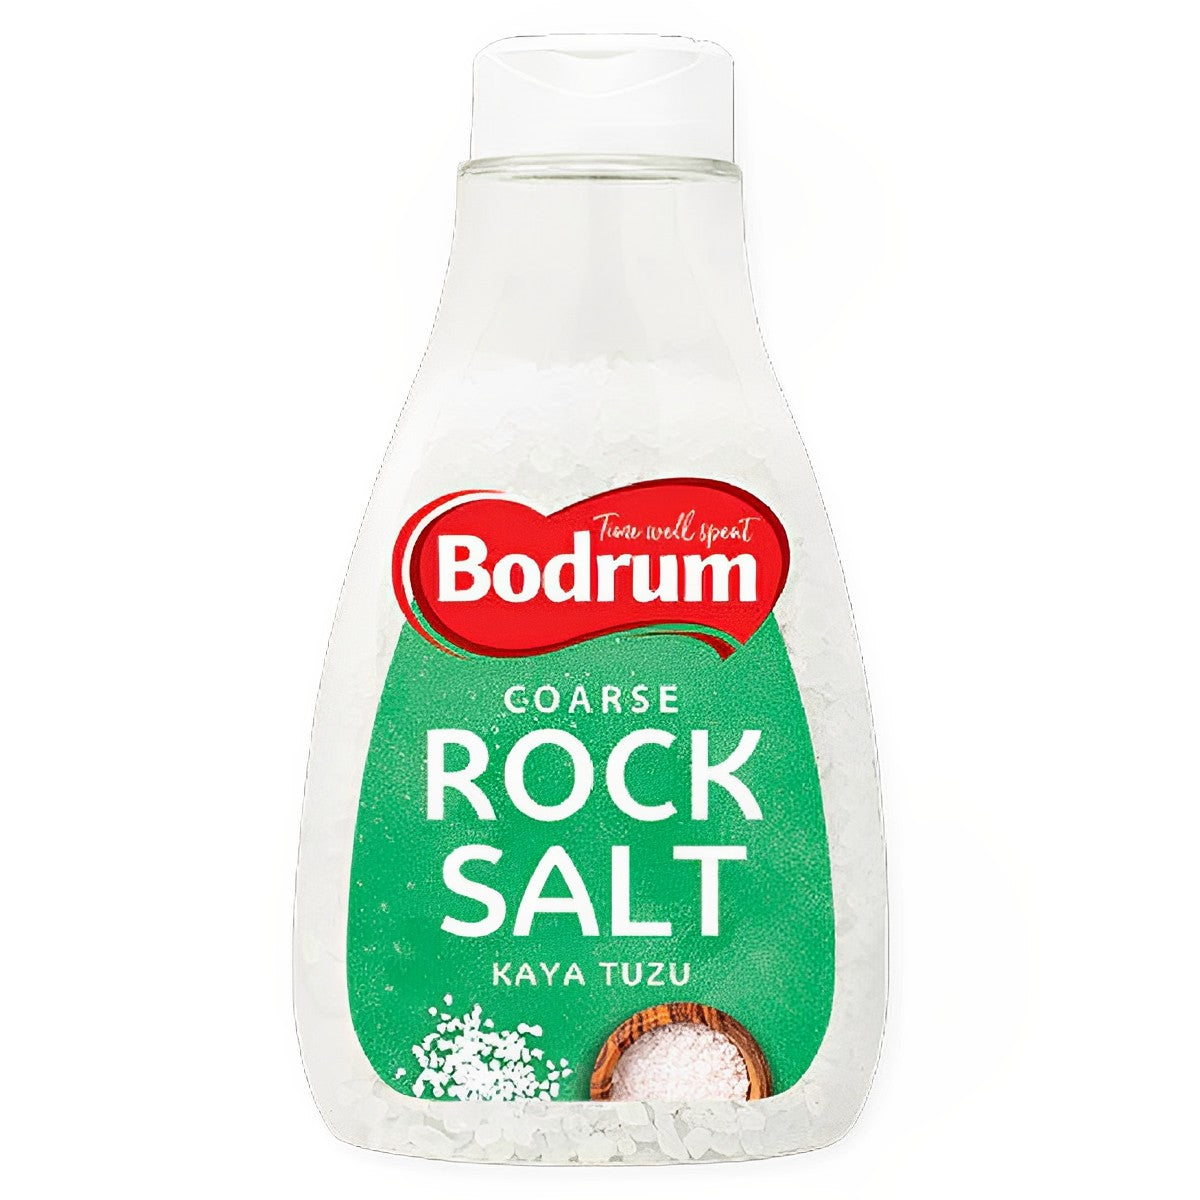 Bodrum - Spice Rock Salt Bottle - 450g - Continental Food Store